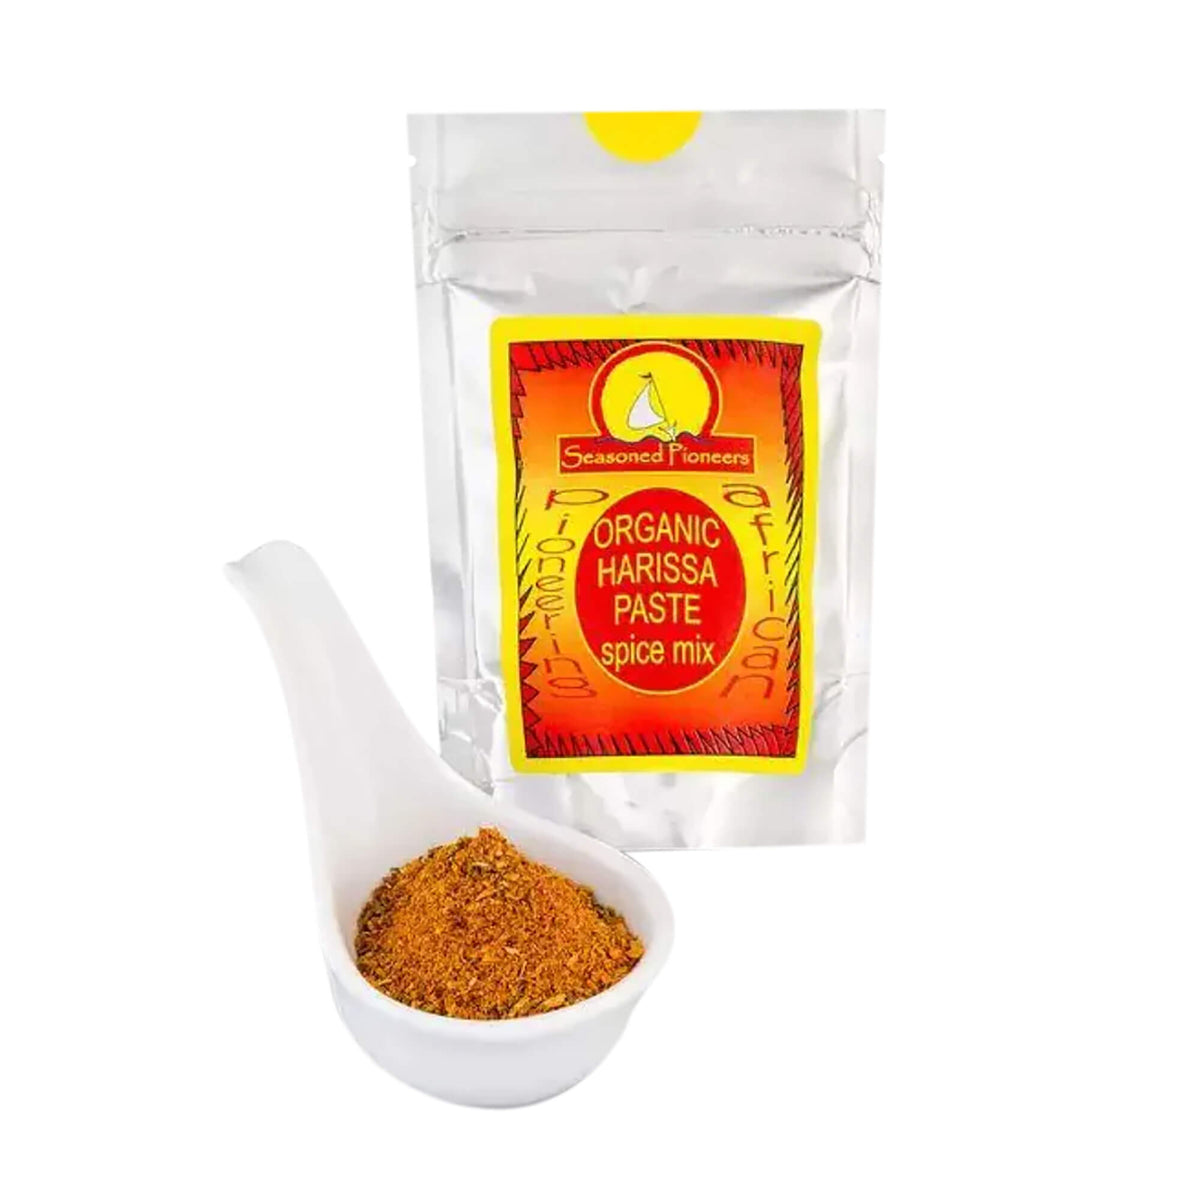 Seasoned Pioneers - Harissa Spice Mix Organic (27g)